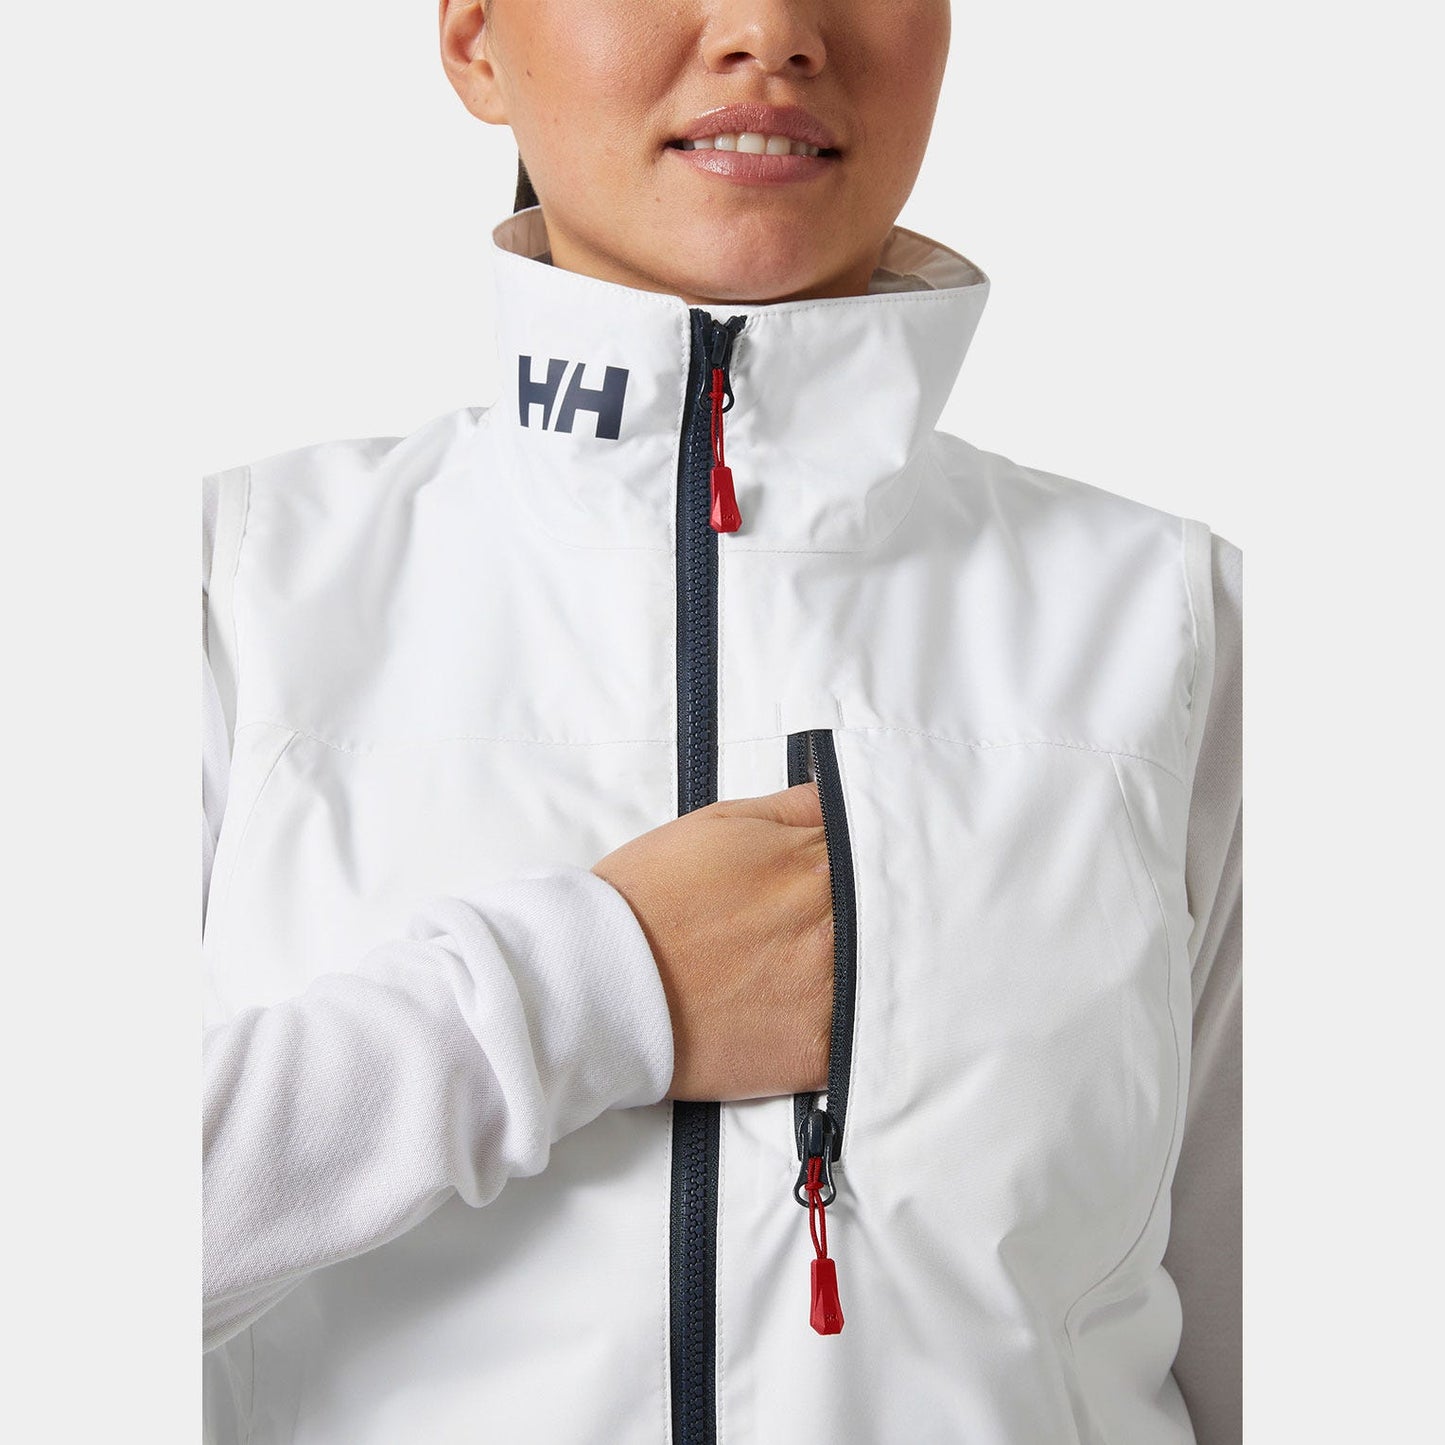 Helly Hansen MWSC Women's Crew Vest 2.0